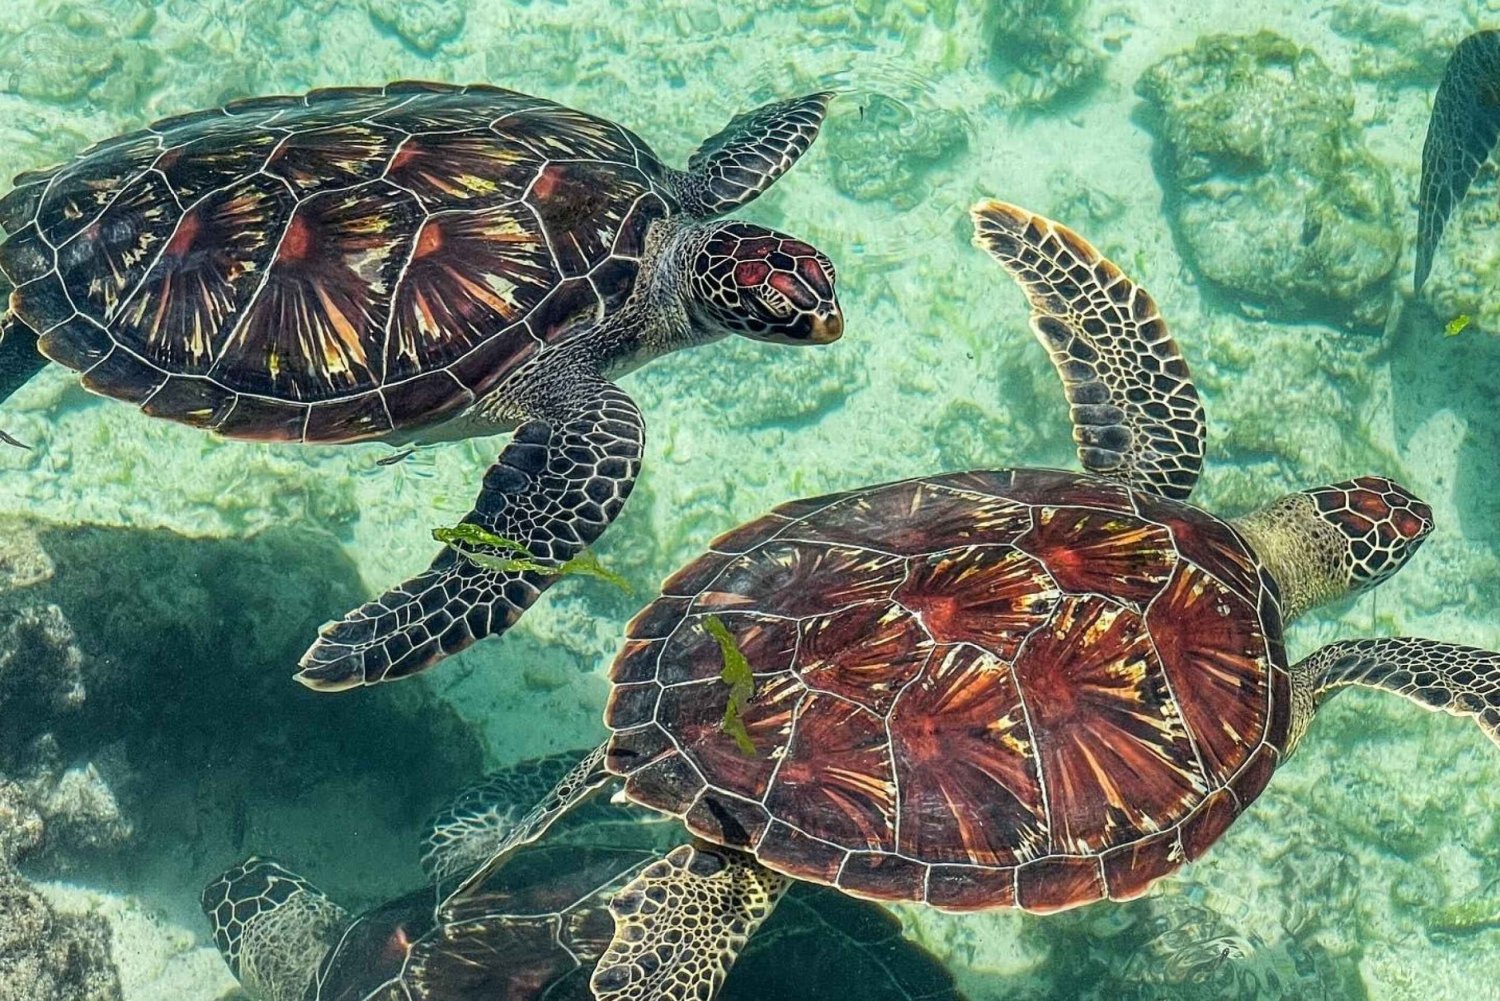 Zanzibar: Tour 'Nuotare con le tartarughe